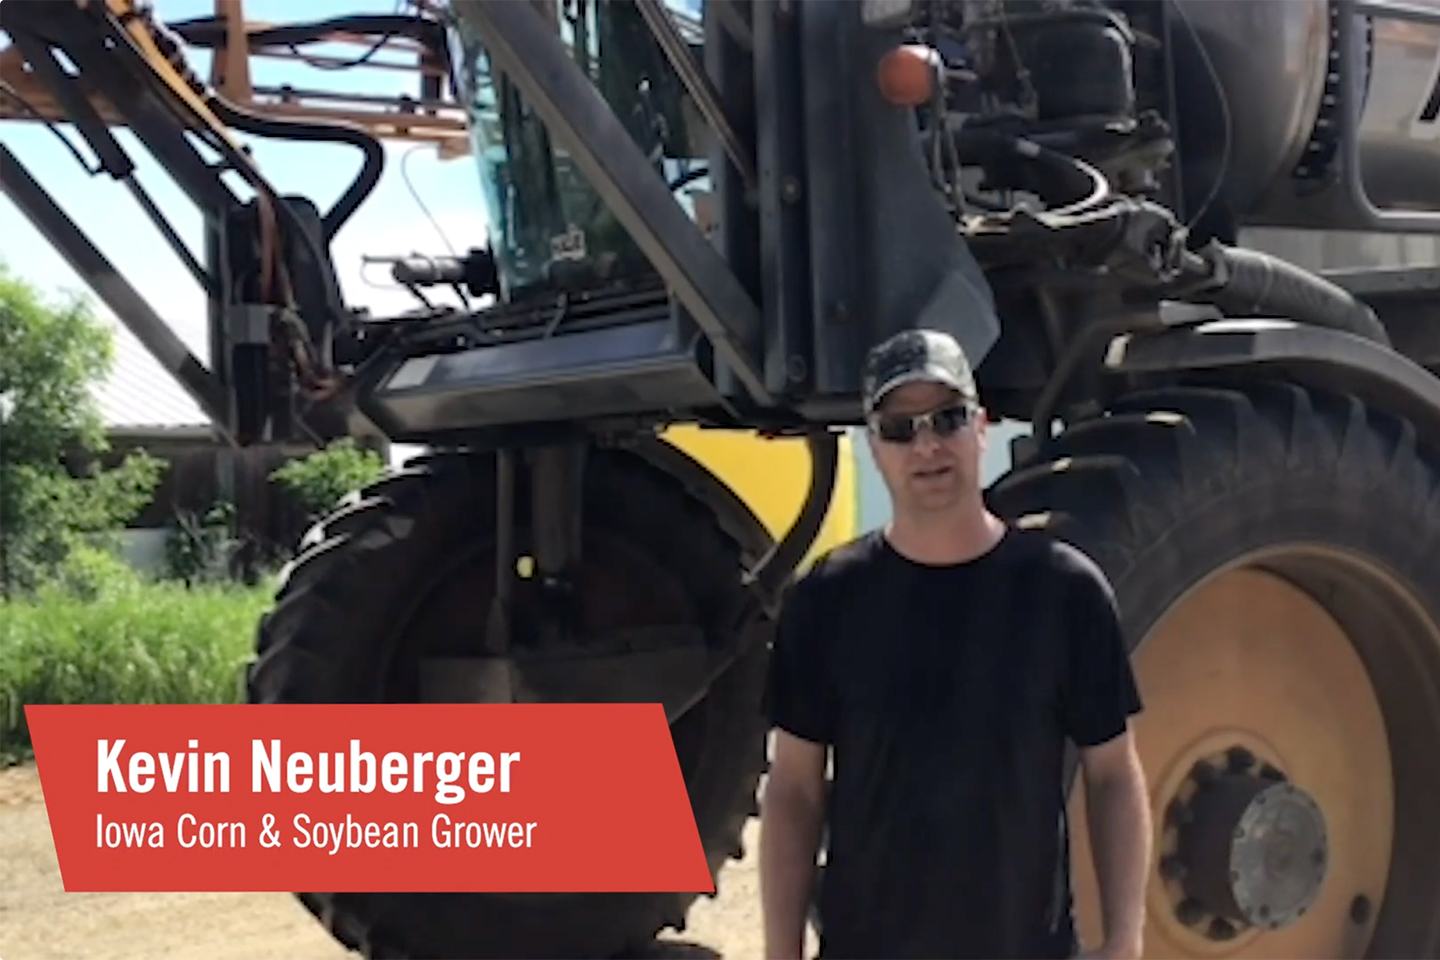 Kevin Neuberger, Iowa Corn & Soybean Grower